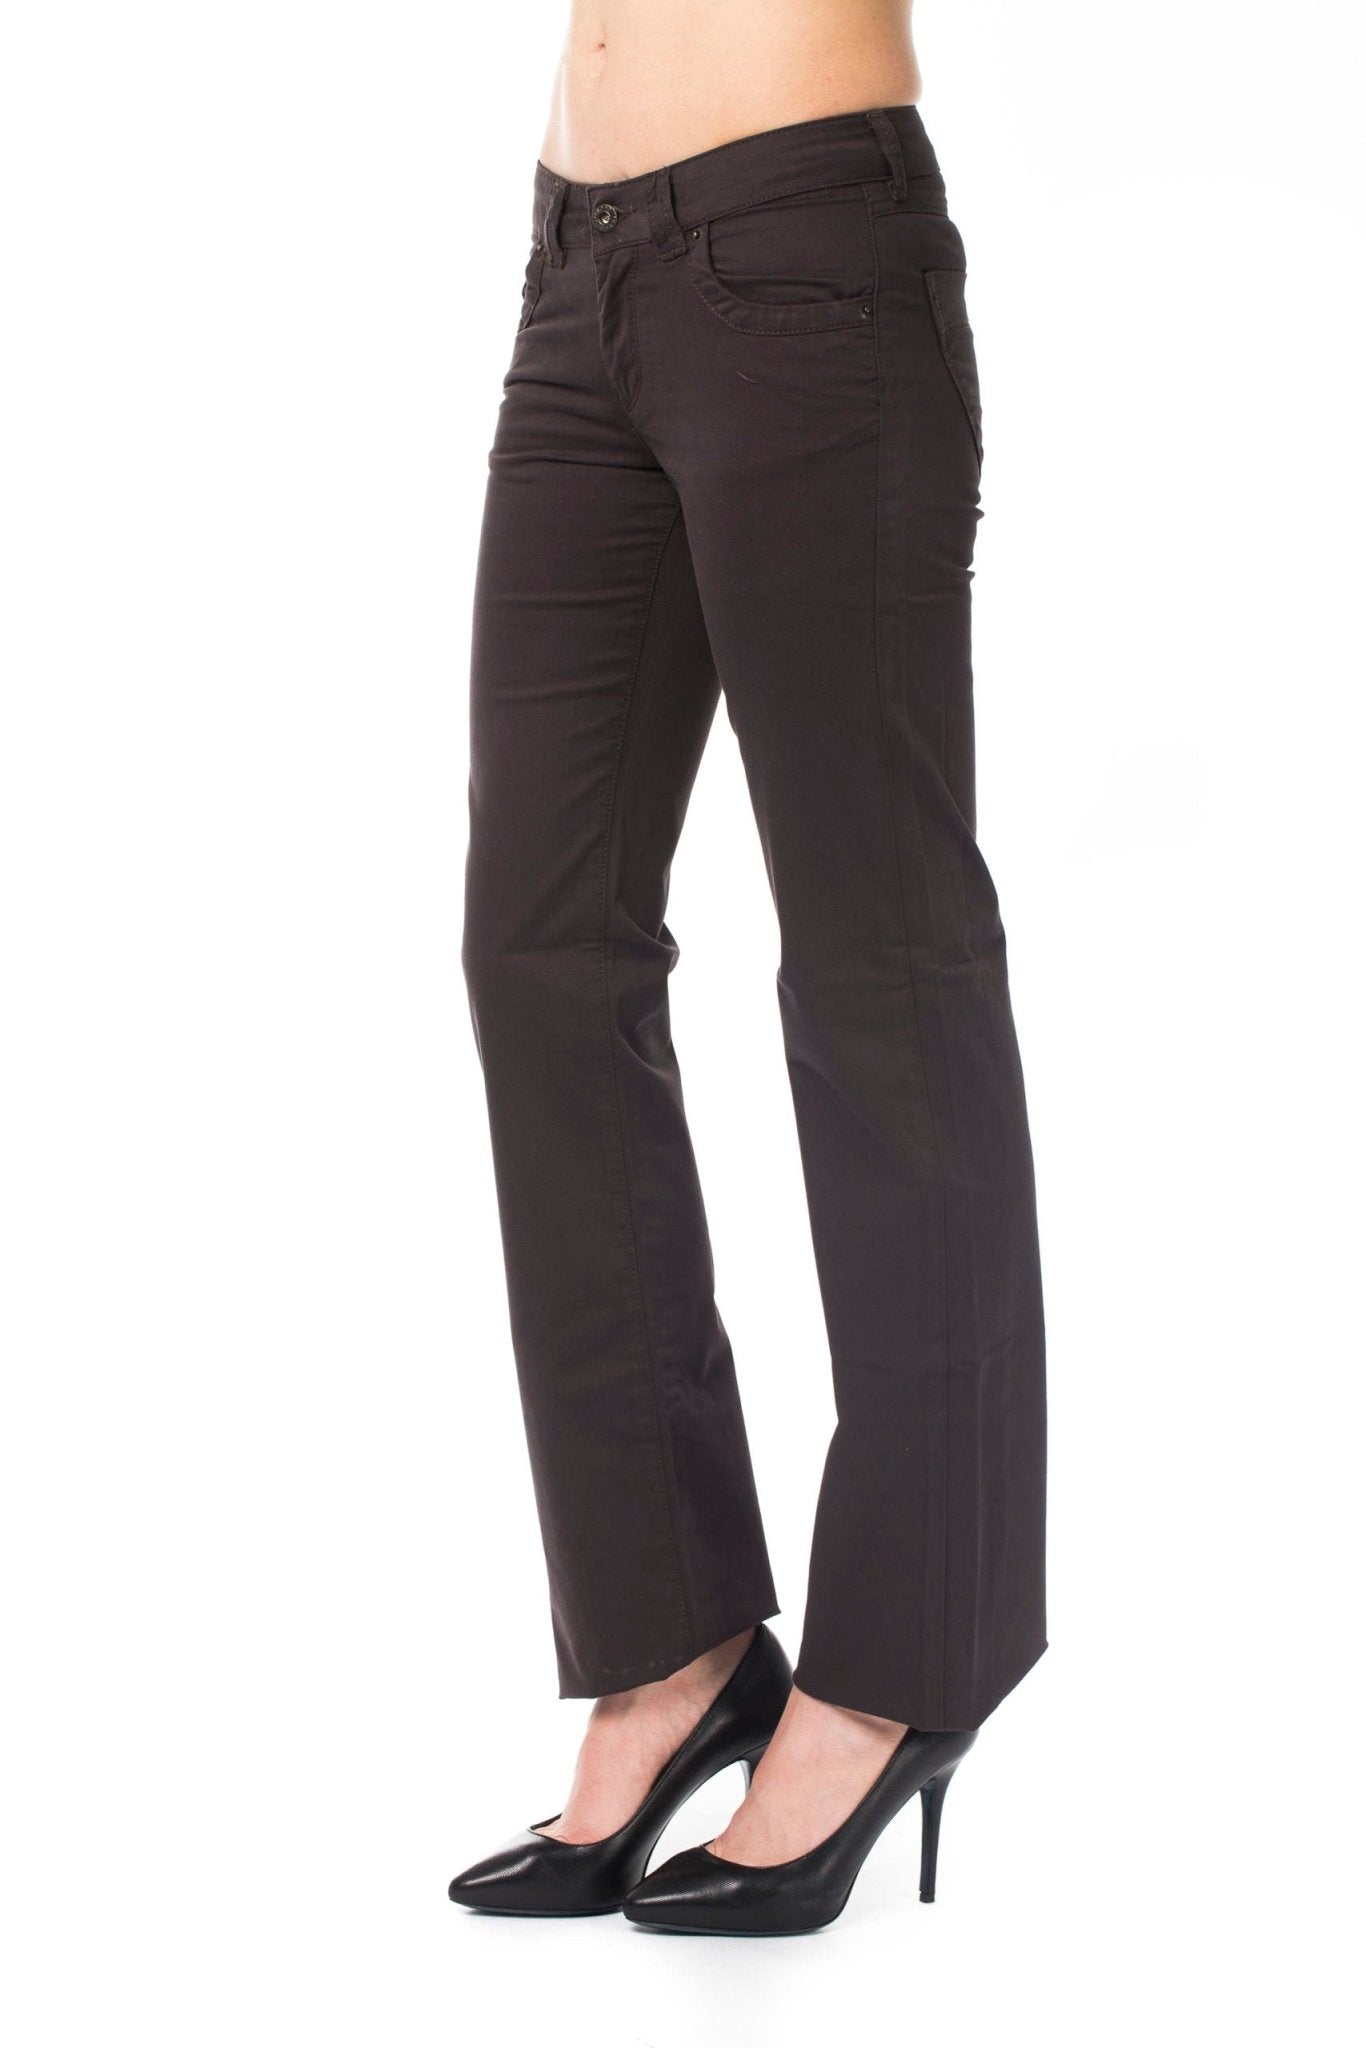 Ungaro Fever Brown Cotton Jeans & Pant - Fizigo